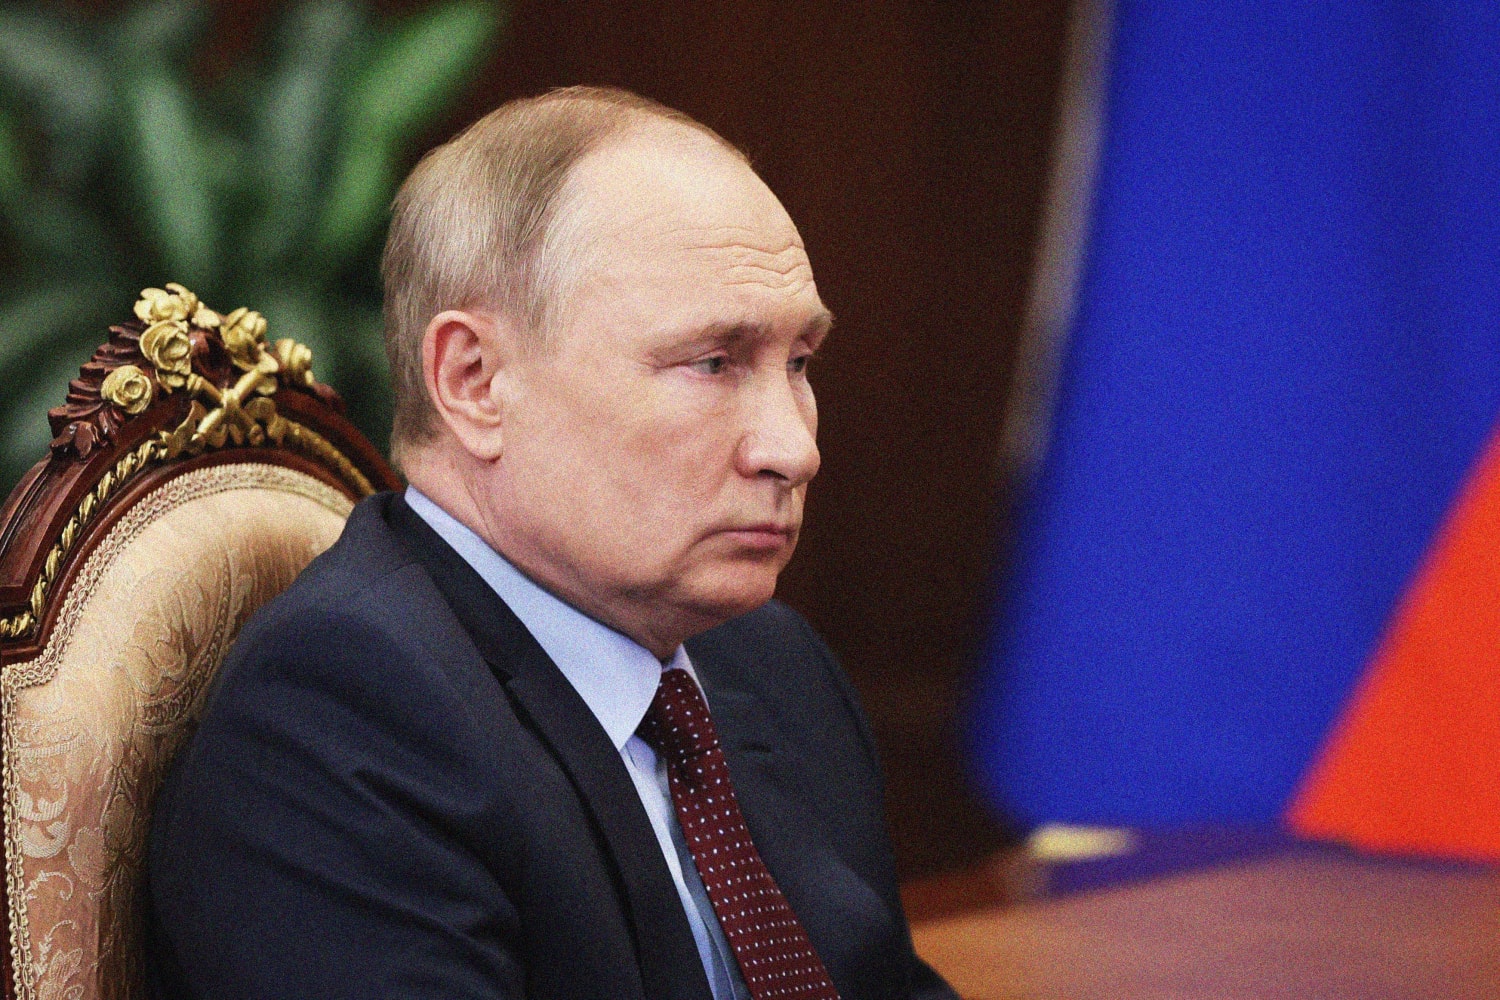 Scum and traitors': Under pressure over Ukraine, Putin turns his ire on  Russians